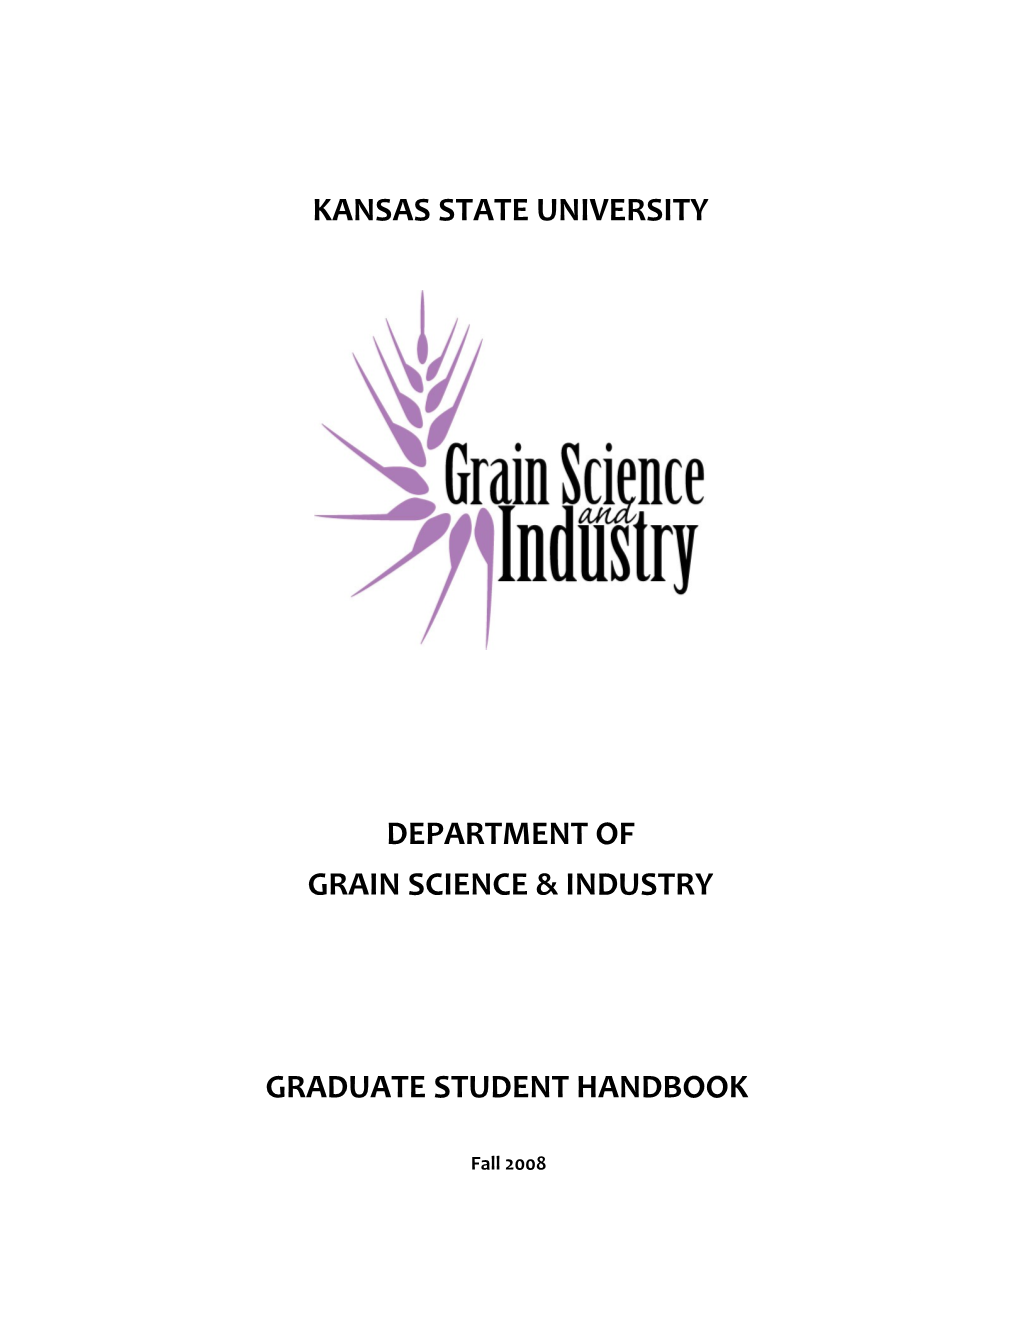 Grain Science & Industry